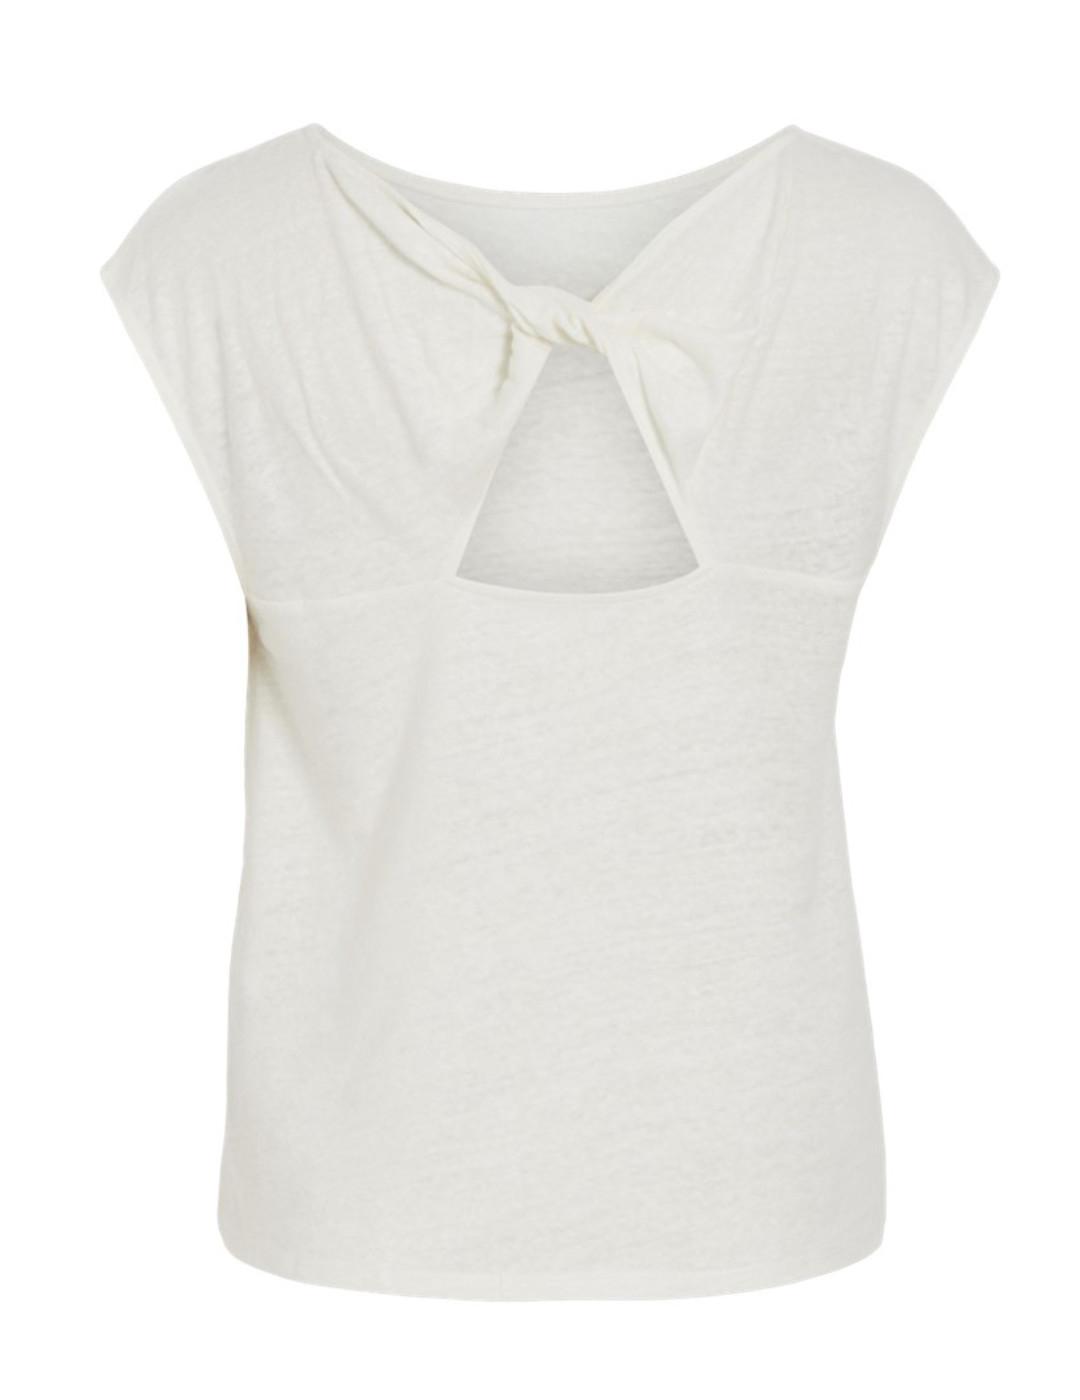 Camiseta Vila Fiara blanco de lino manga corta para mujer